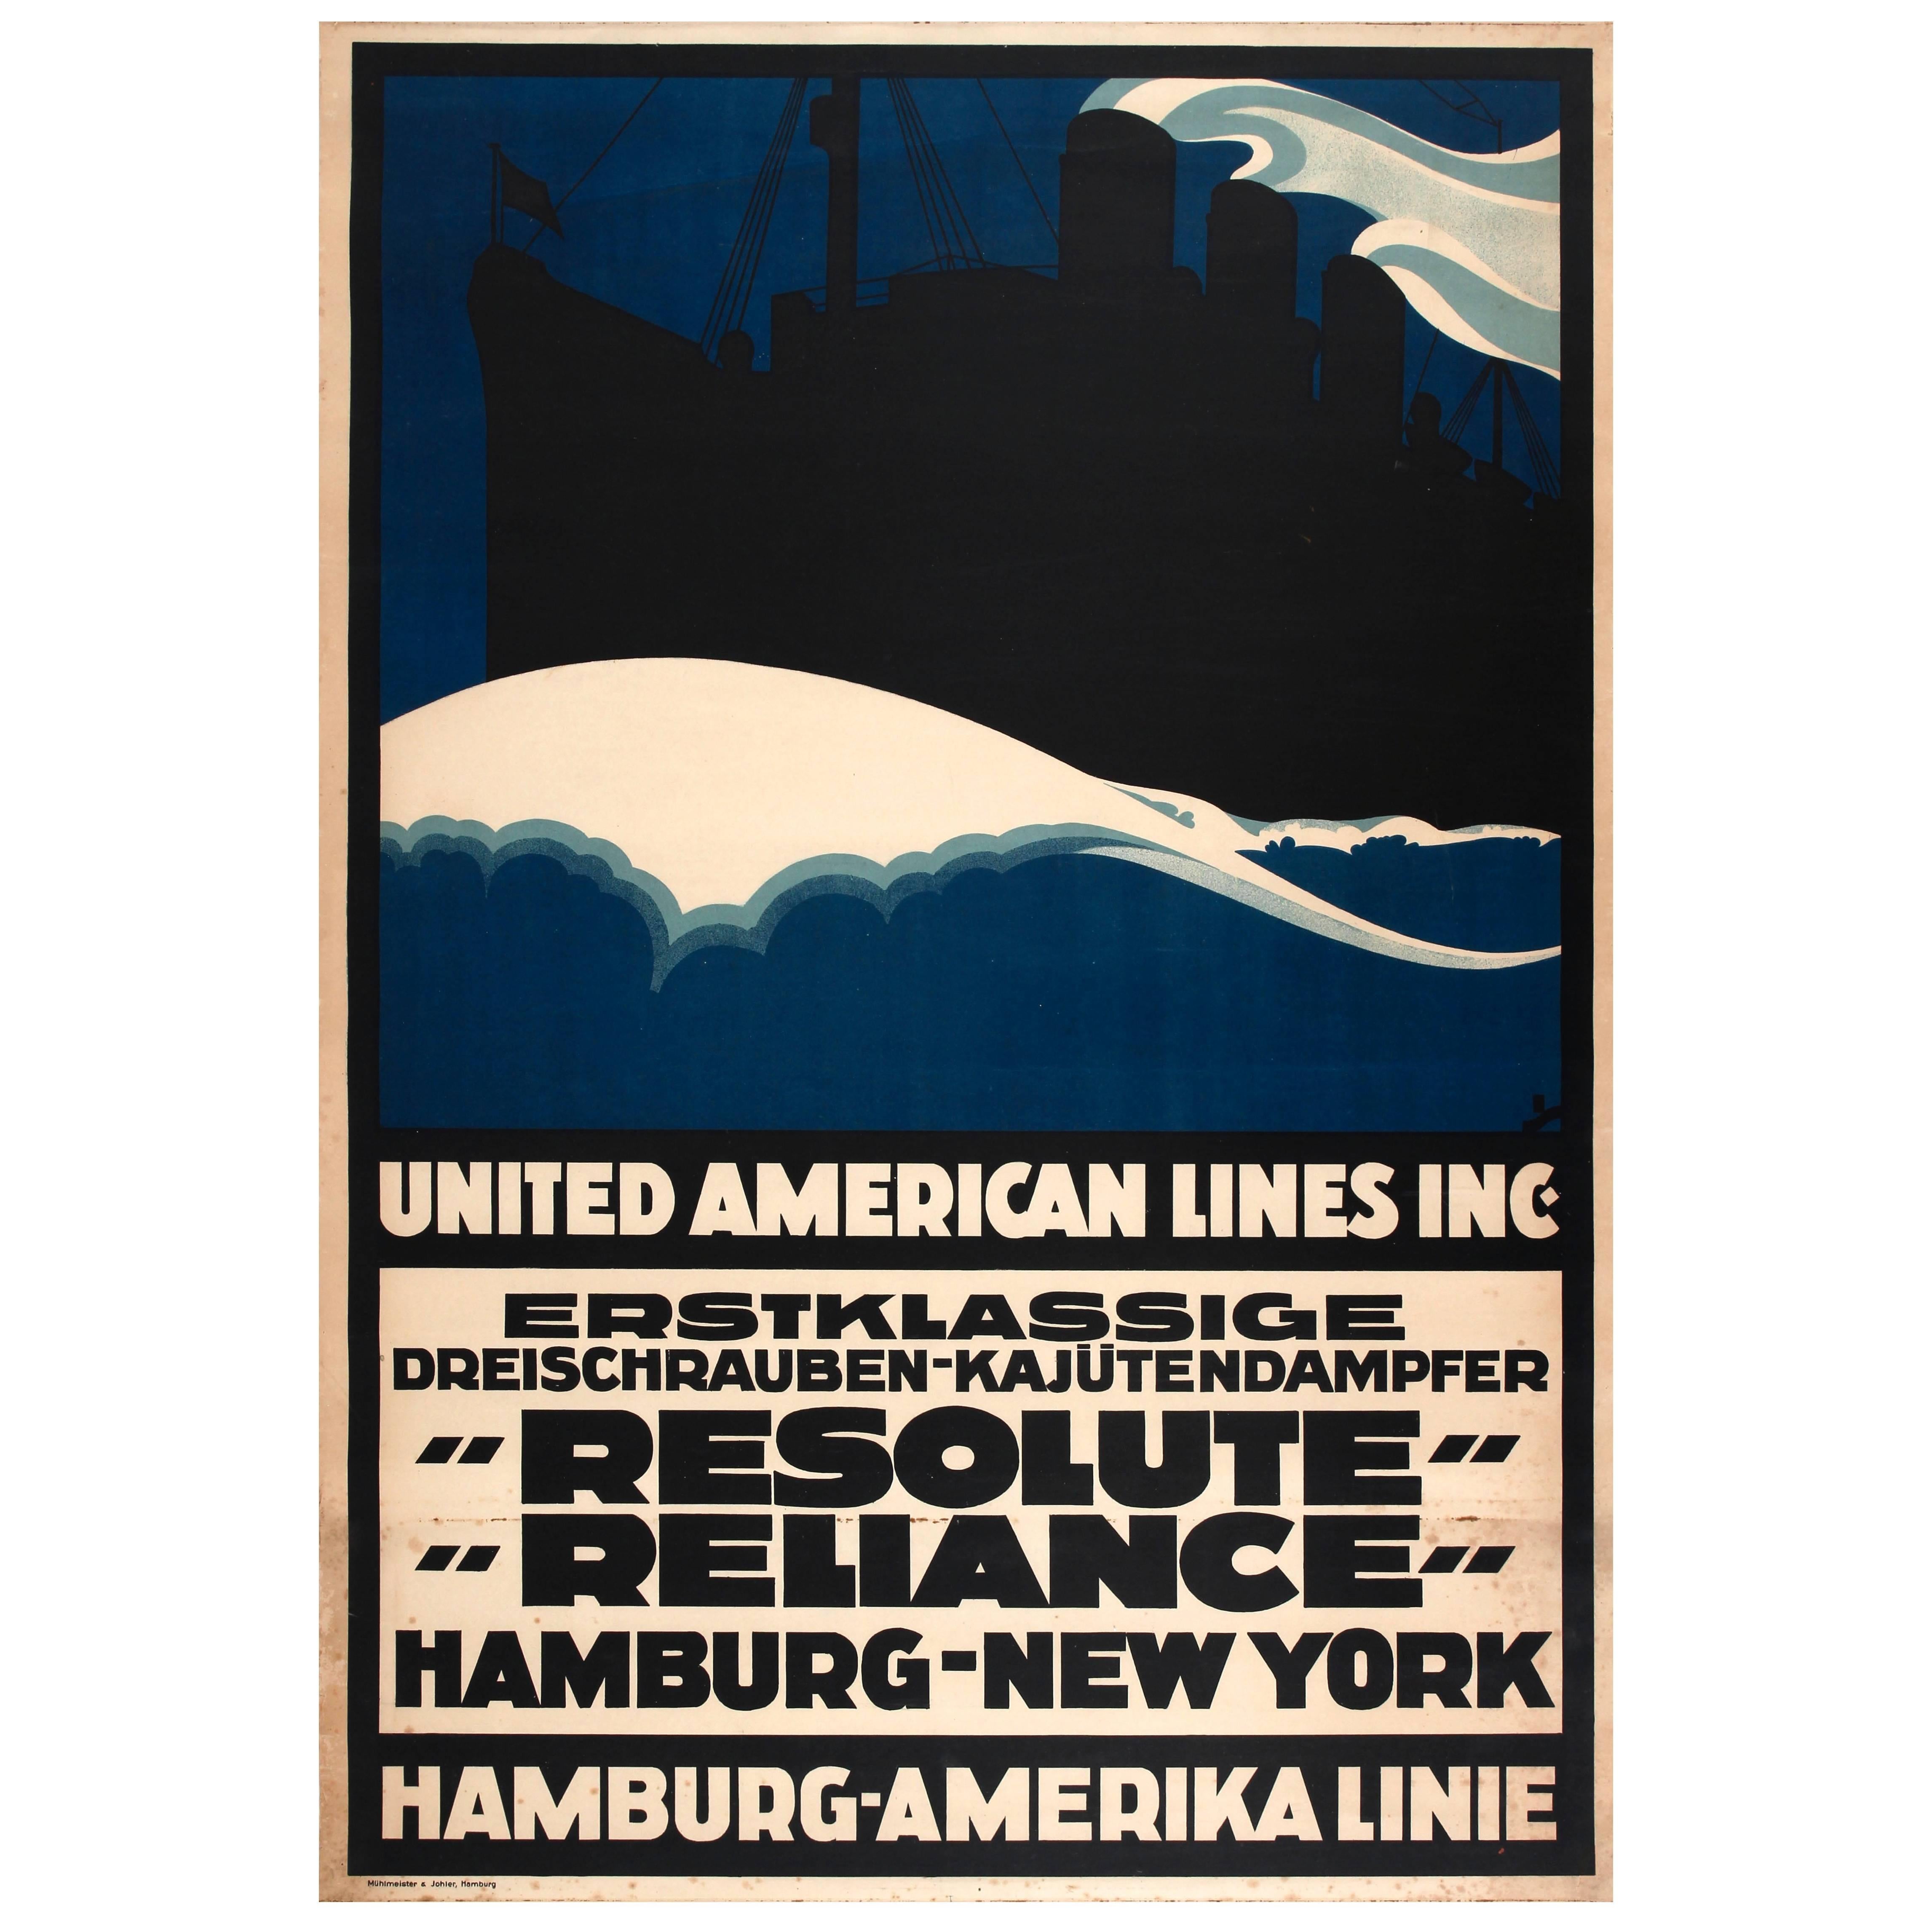 Original Cruise Ship Travel Poster for Hamburg-New York by "Resolute" "Reliance"